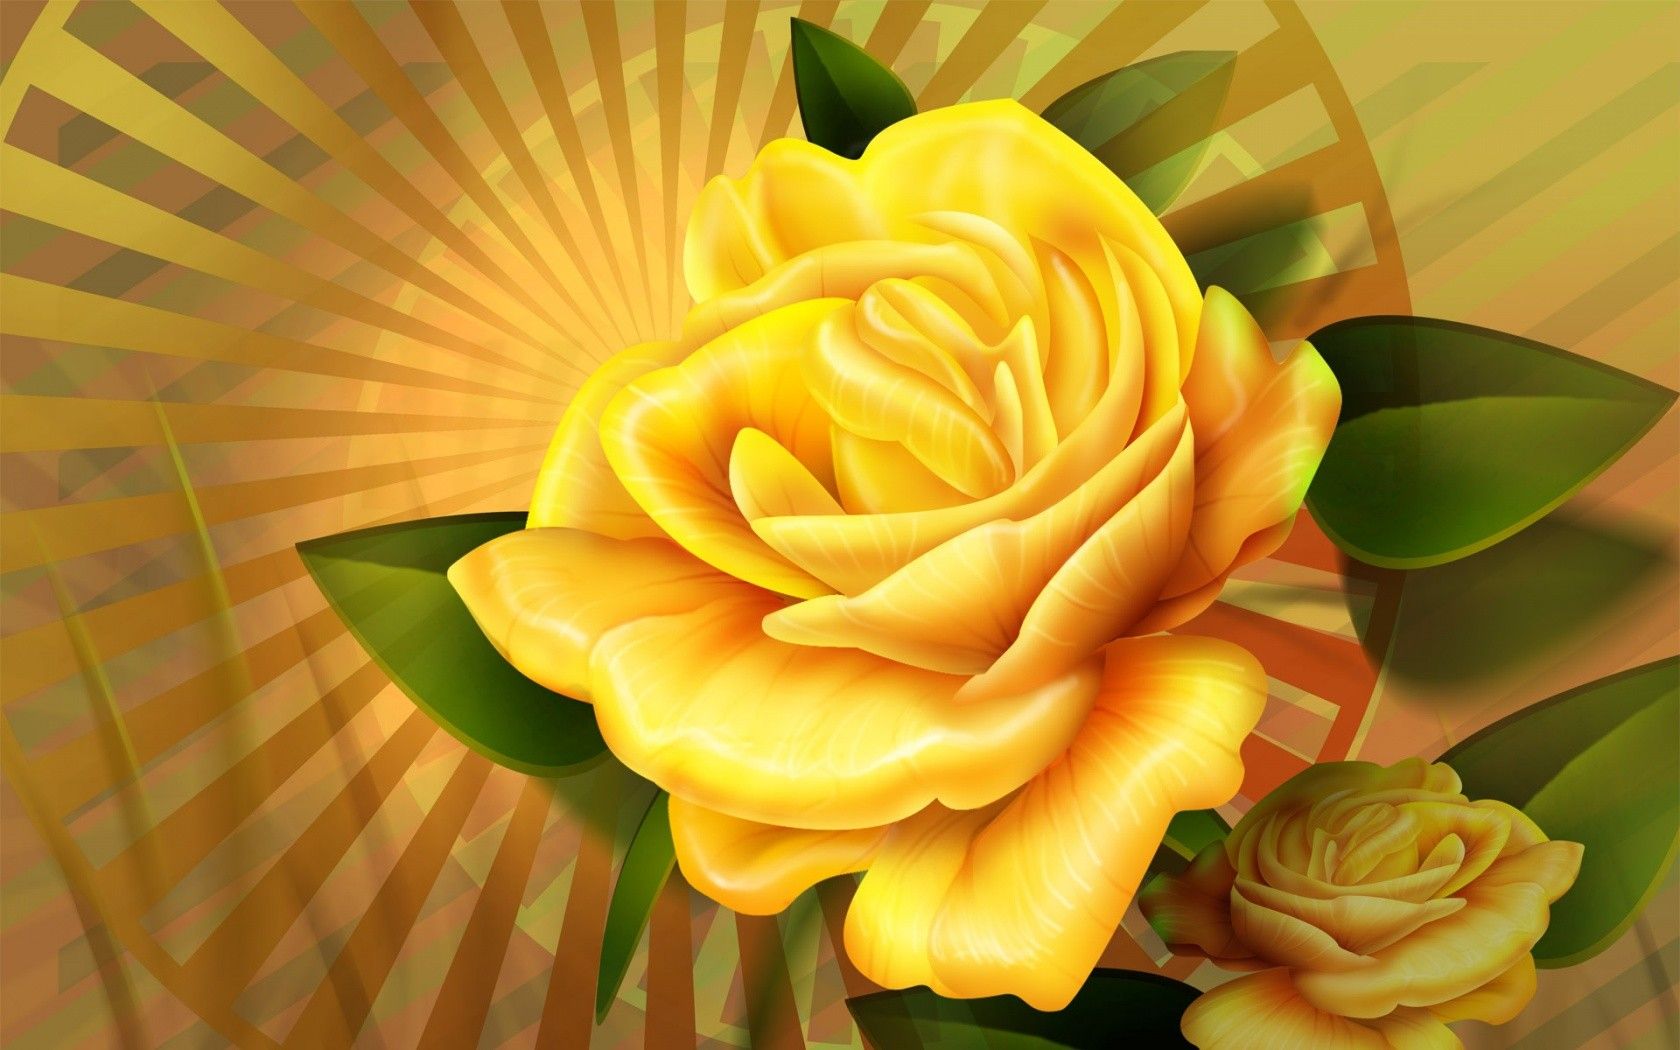 Awesome-Rose-Flower-Wallpaper-Free-Download-1.jpg